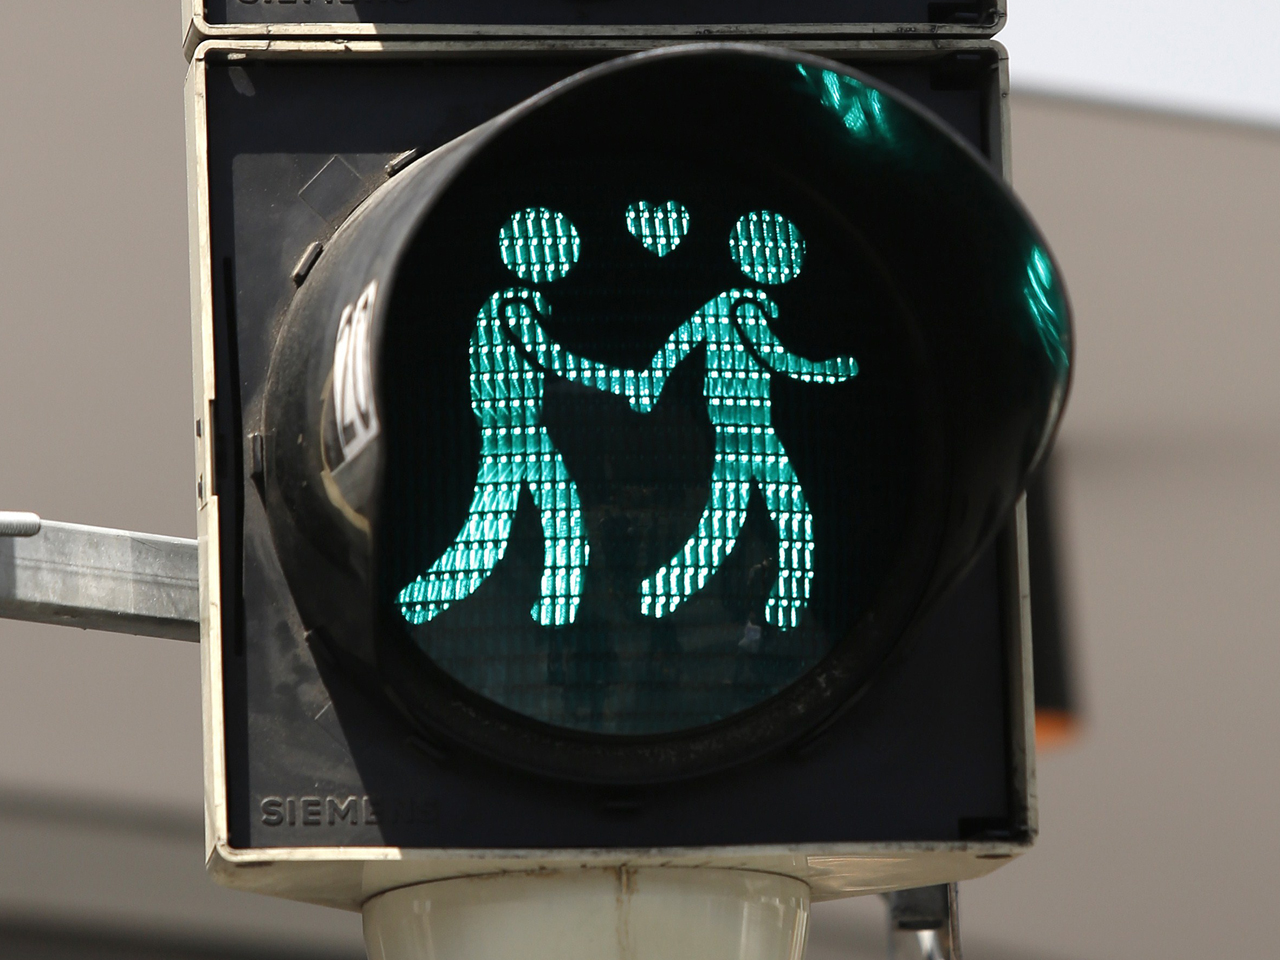 Red, gay, straight: Vienna traffic signals an update - CBS News